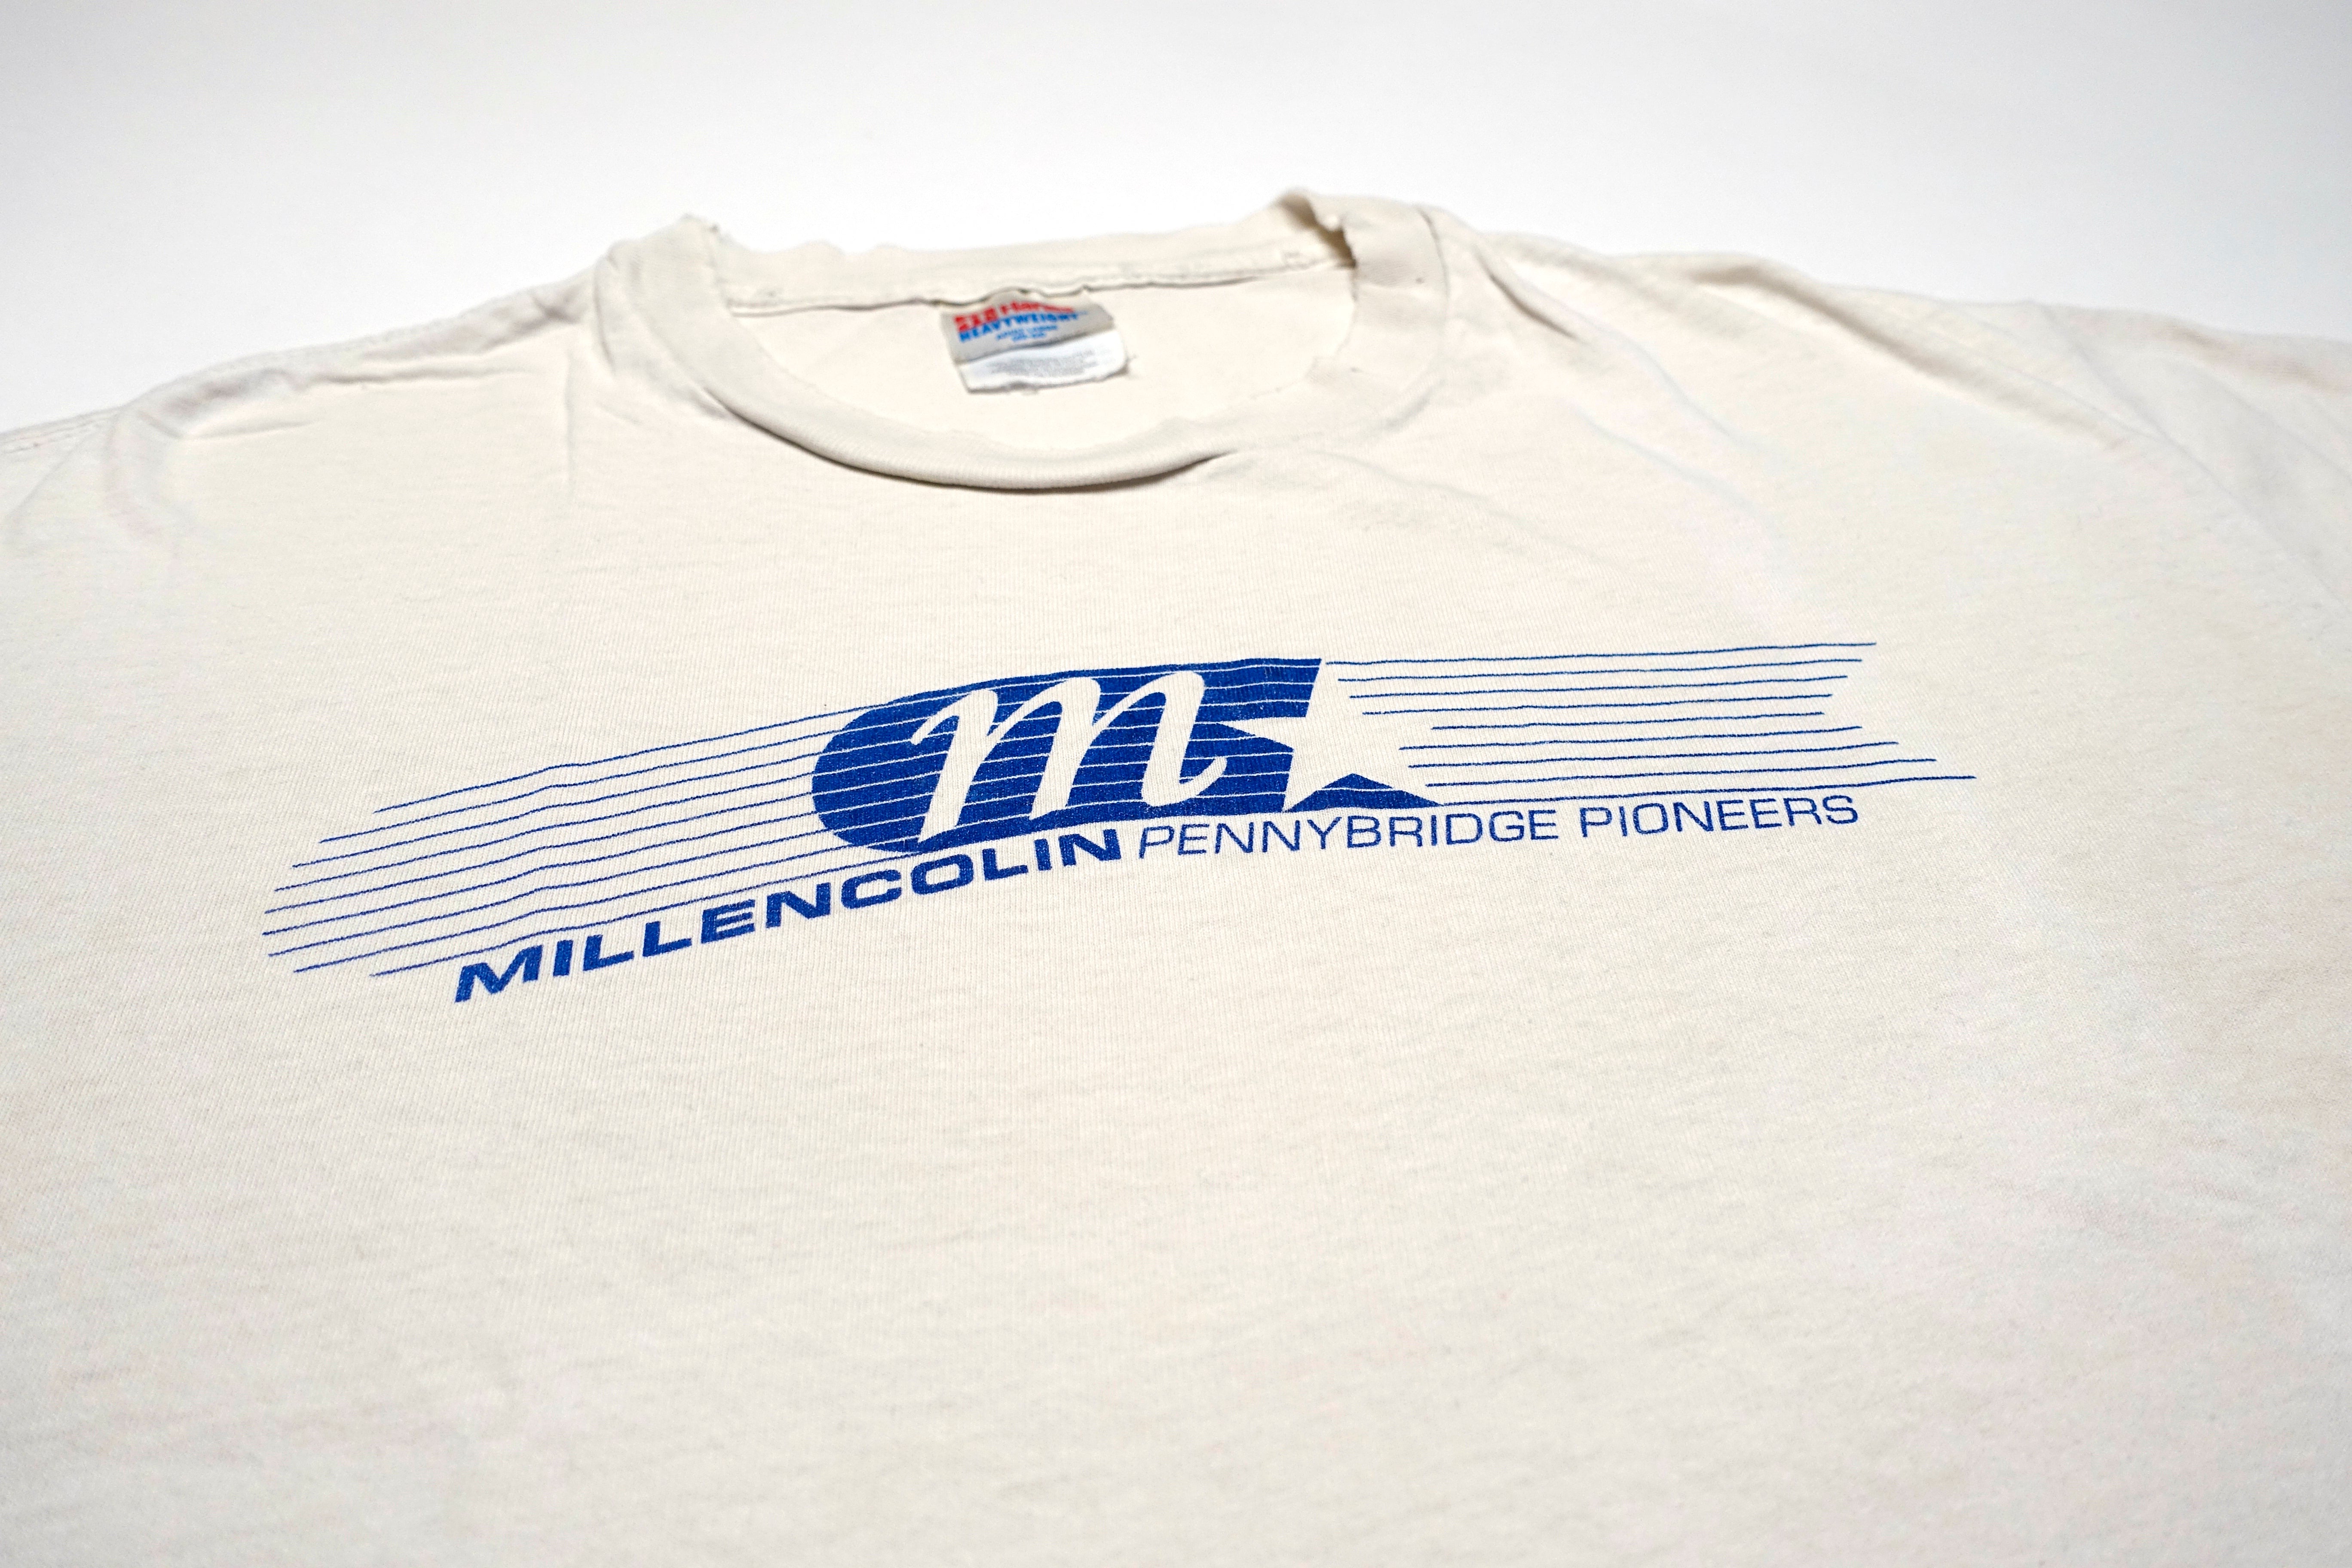 Millencolin - Pennybridge Pioneers 1999 Tour Shirt Size Large